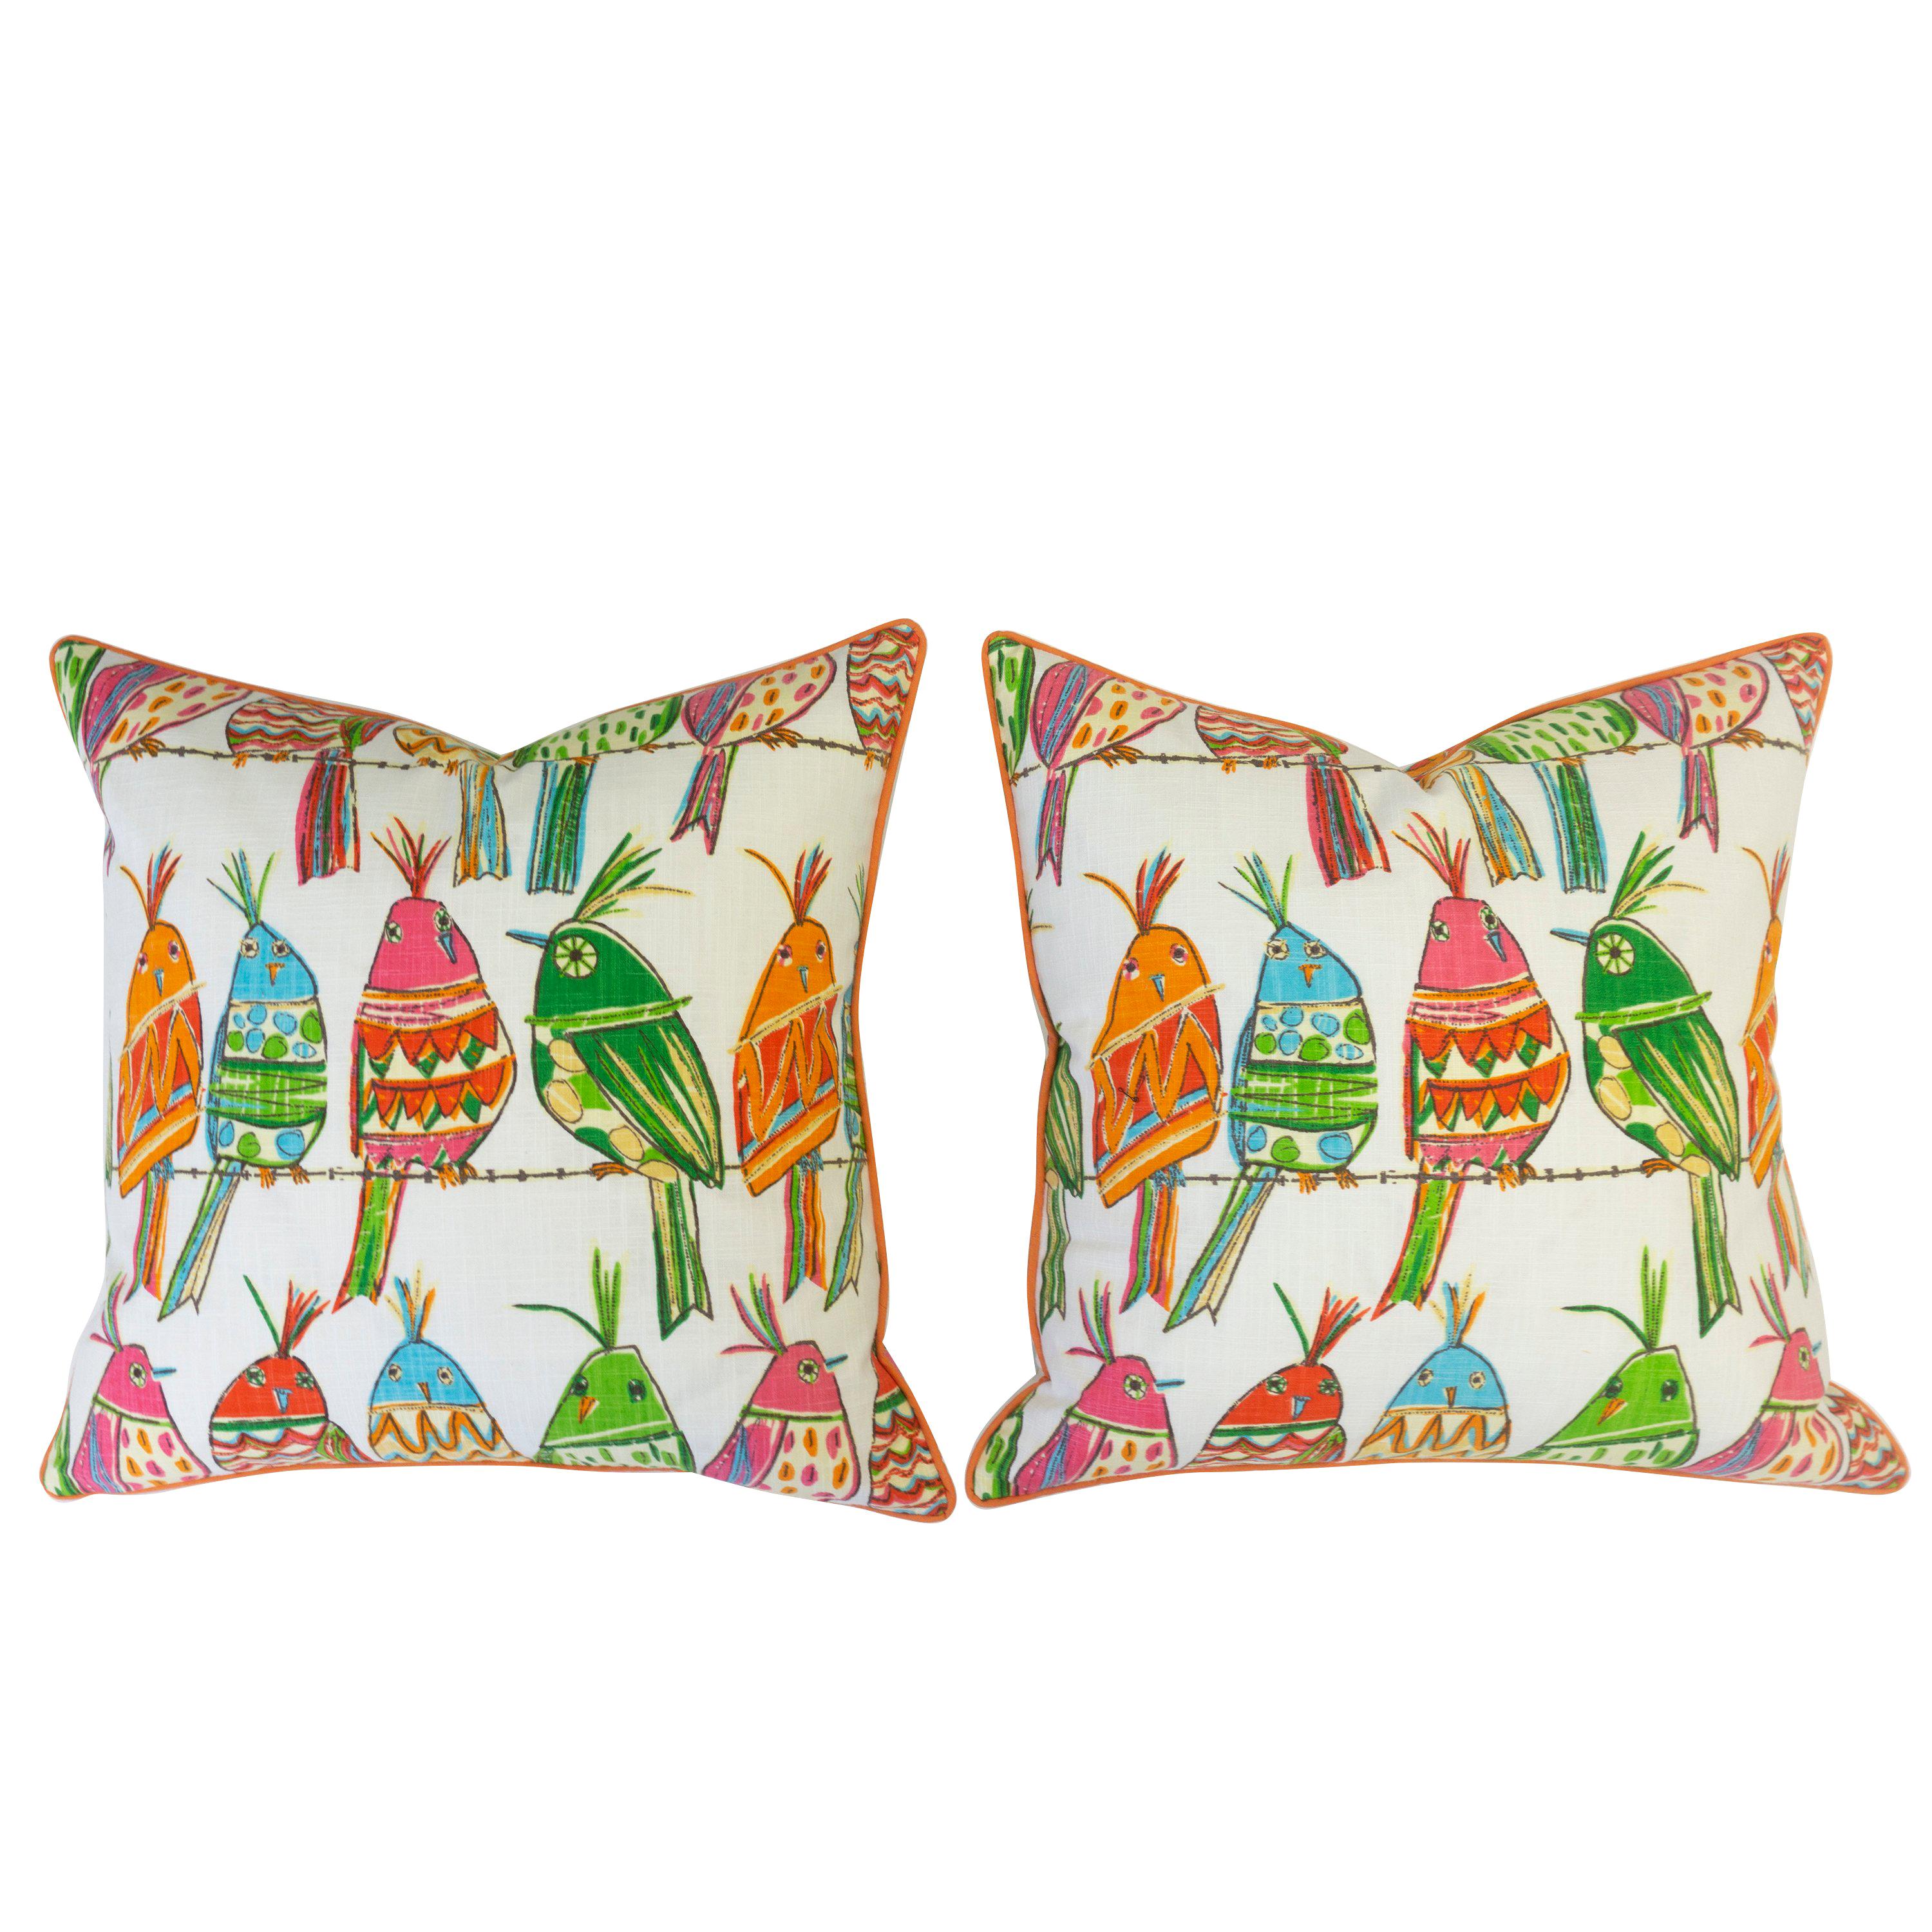 Throw Pillows with Colorful Bird Print